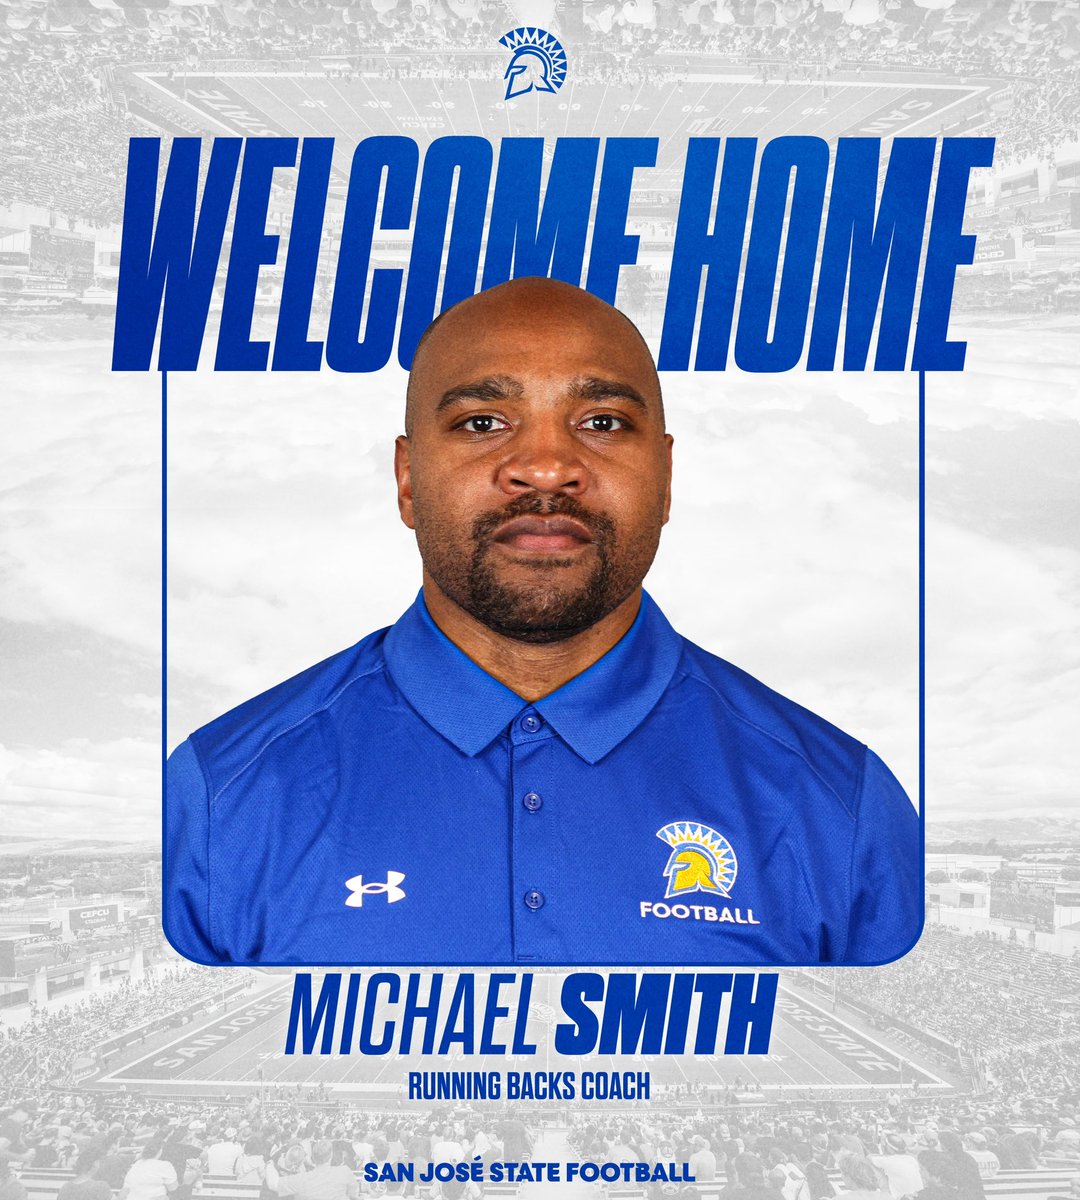 Welcome home, Coach Michael Smith! ⚔️ #ThisIsSparta | #AllSpartans